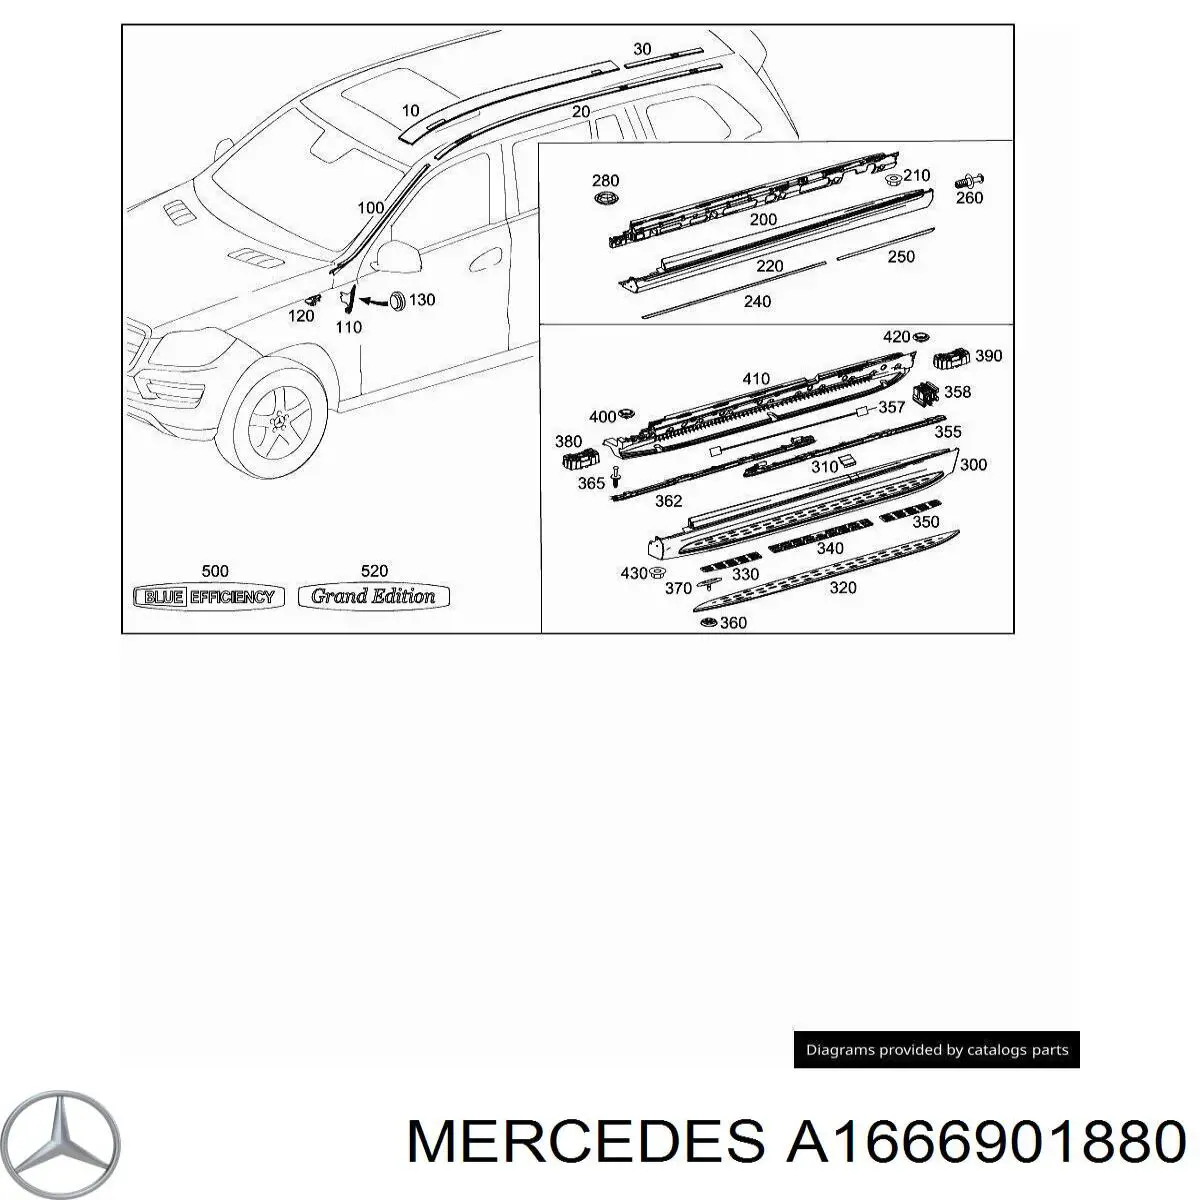 A1666901880 Mercedes